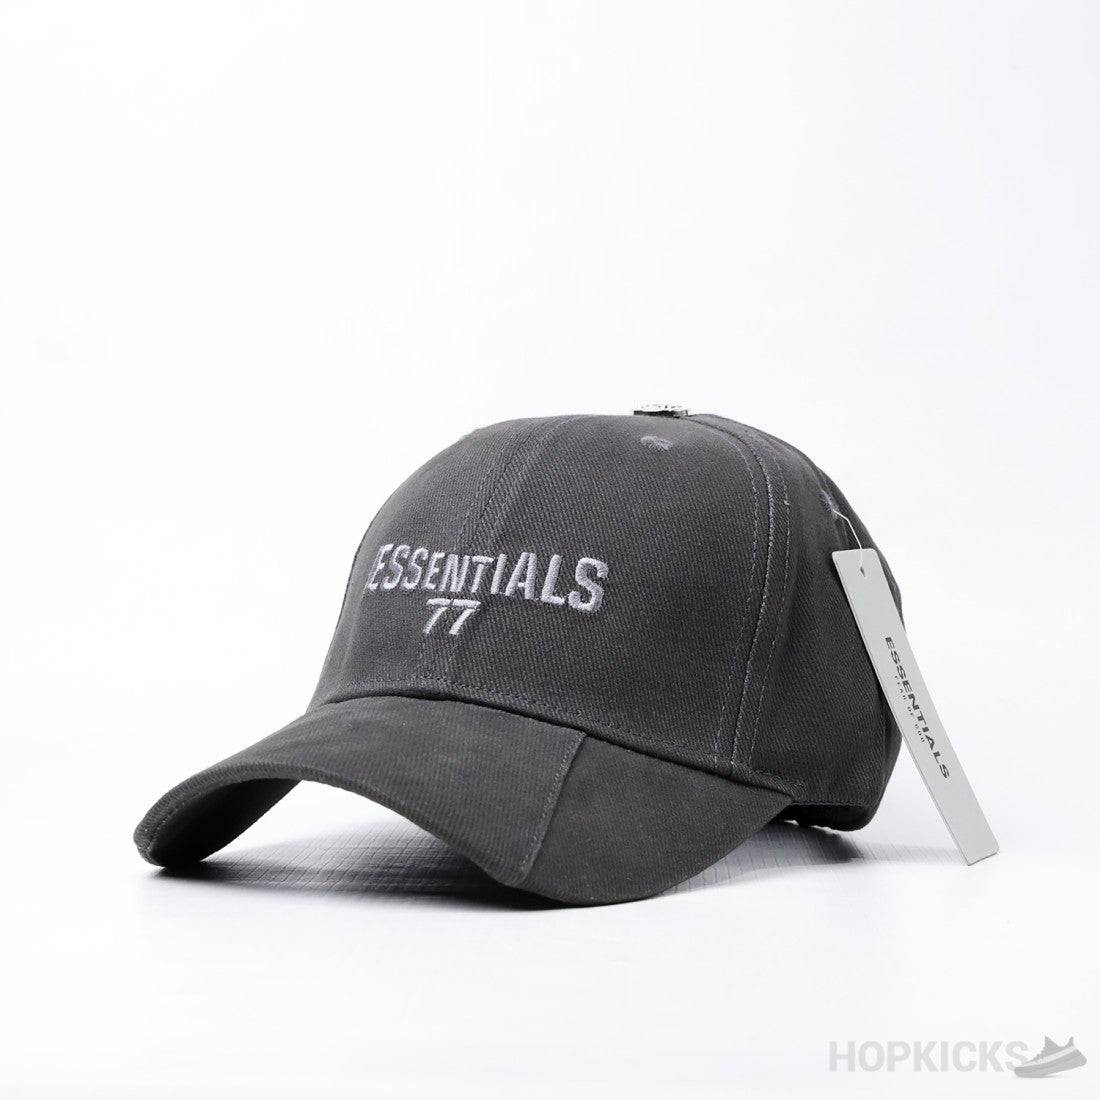 Essentials Embroidered 77 Hardtop Baseball Cap - Valetica Sports